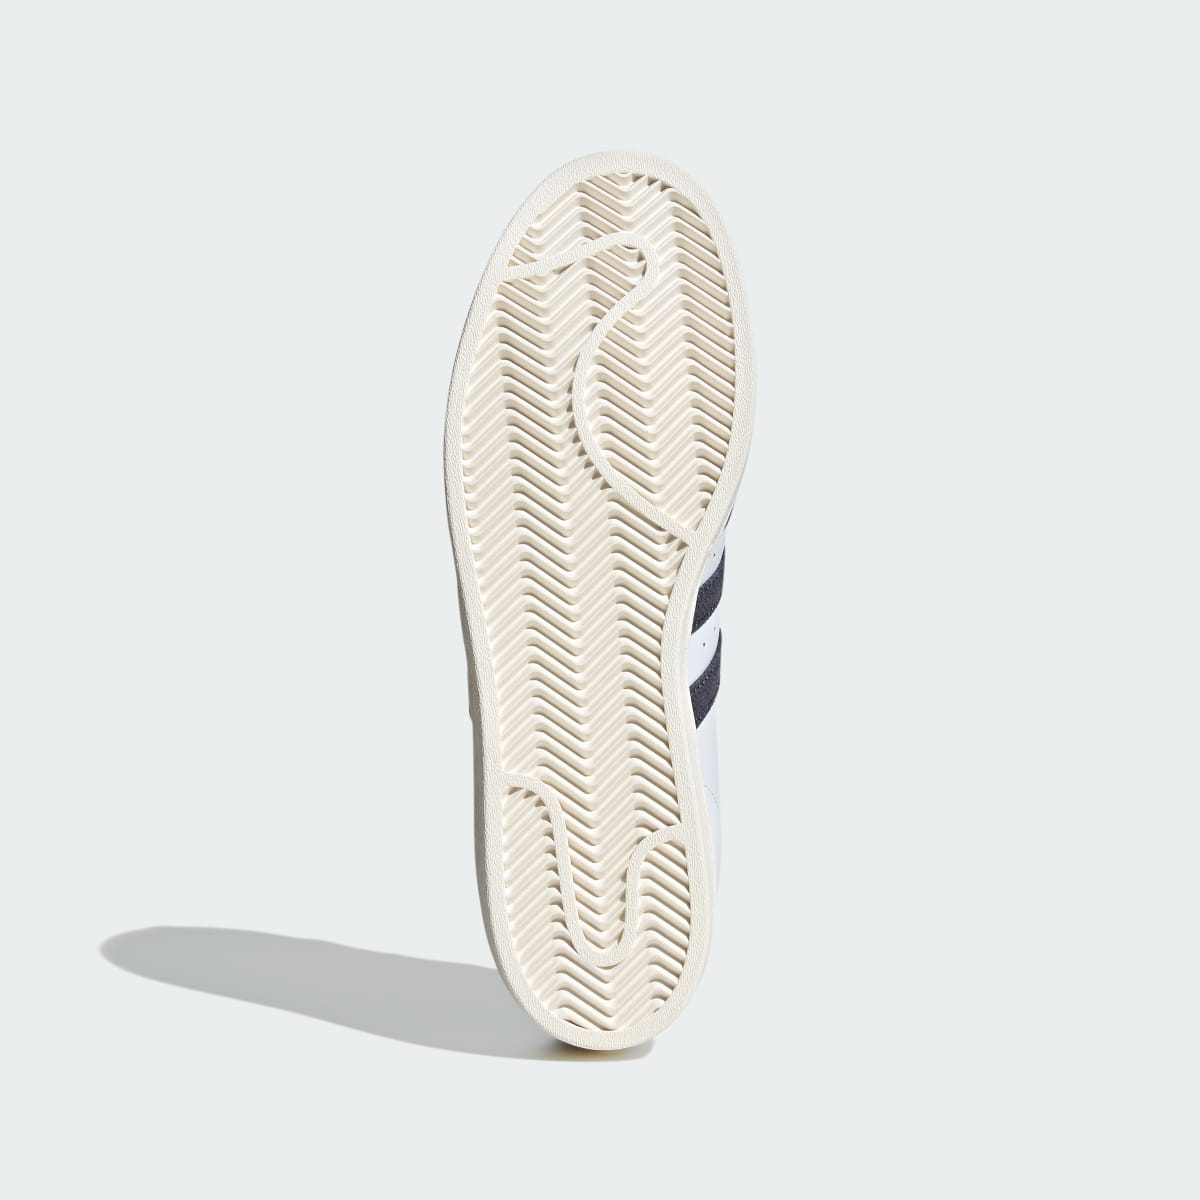 Adidas Scarpe Superstar. 4